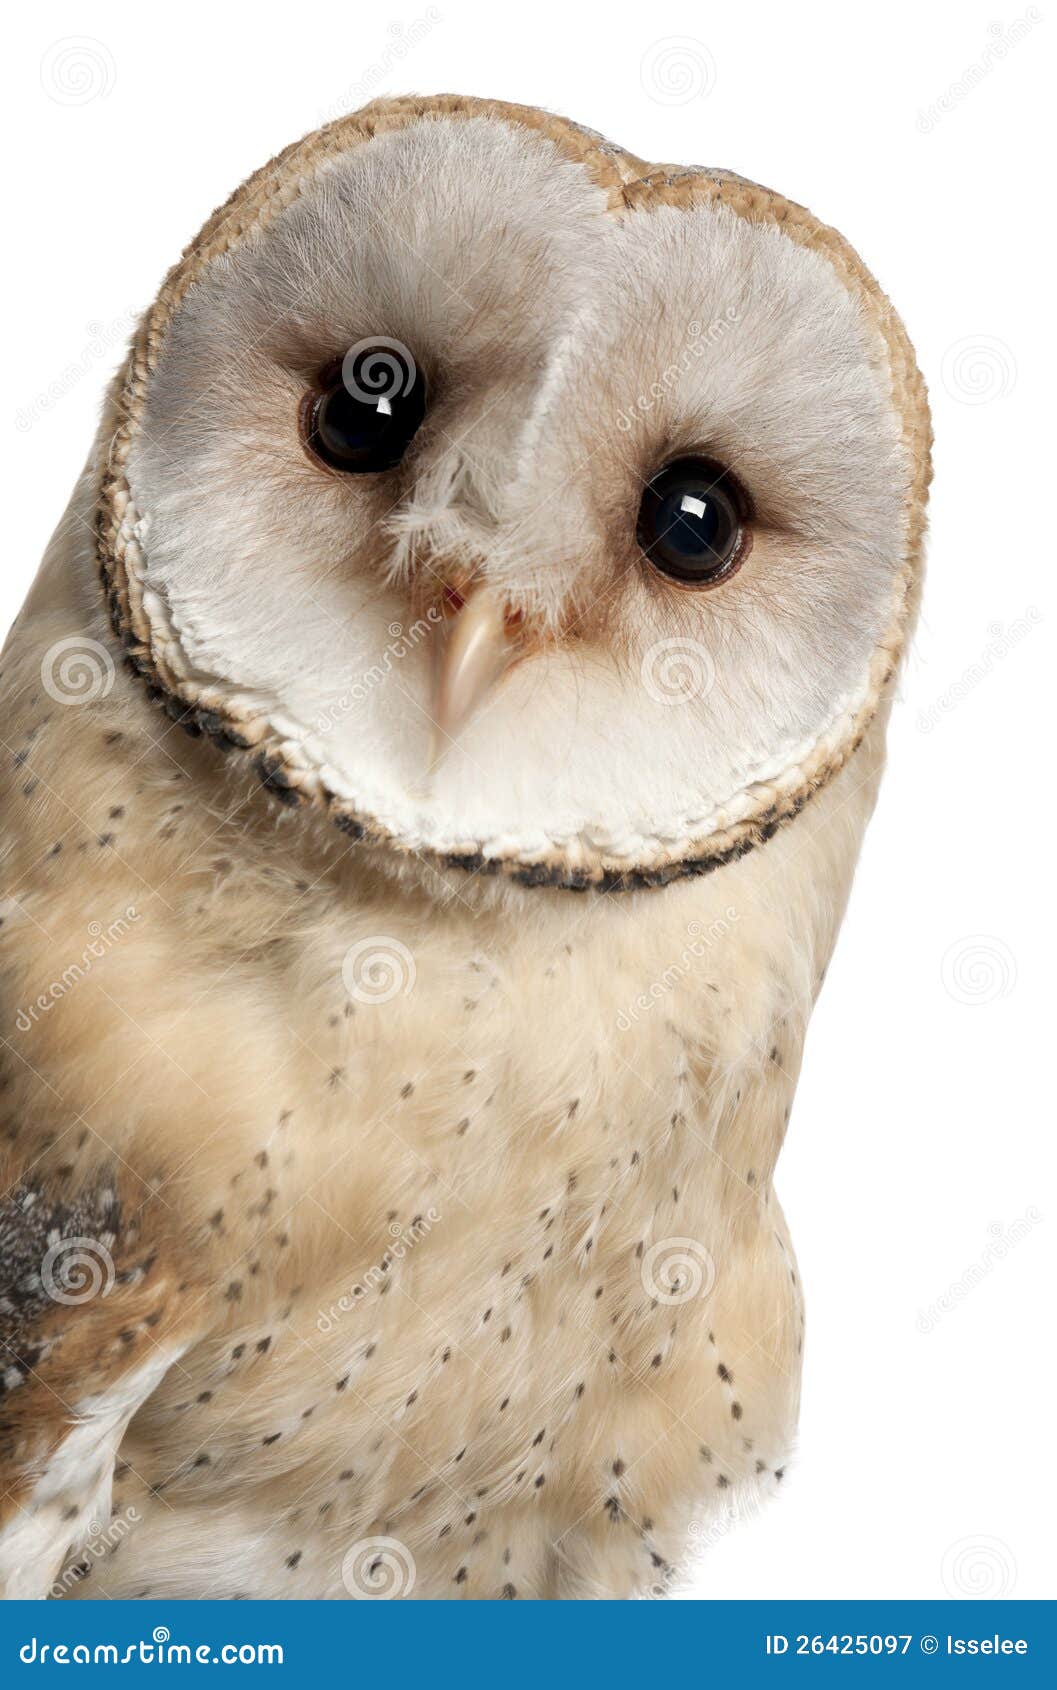 barn owl, tyto alba, 4 months old, portrait